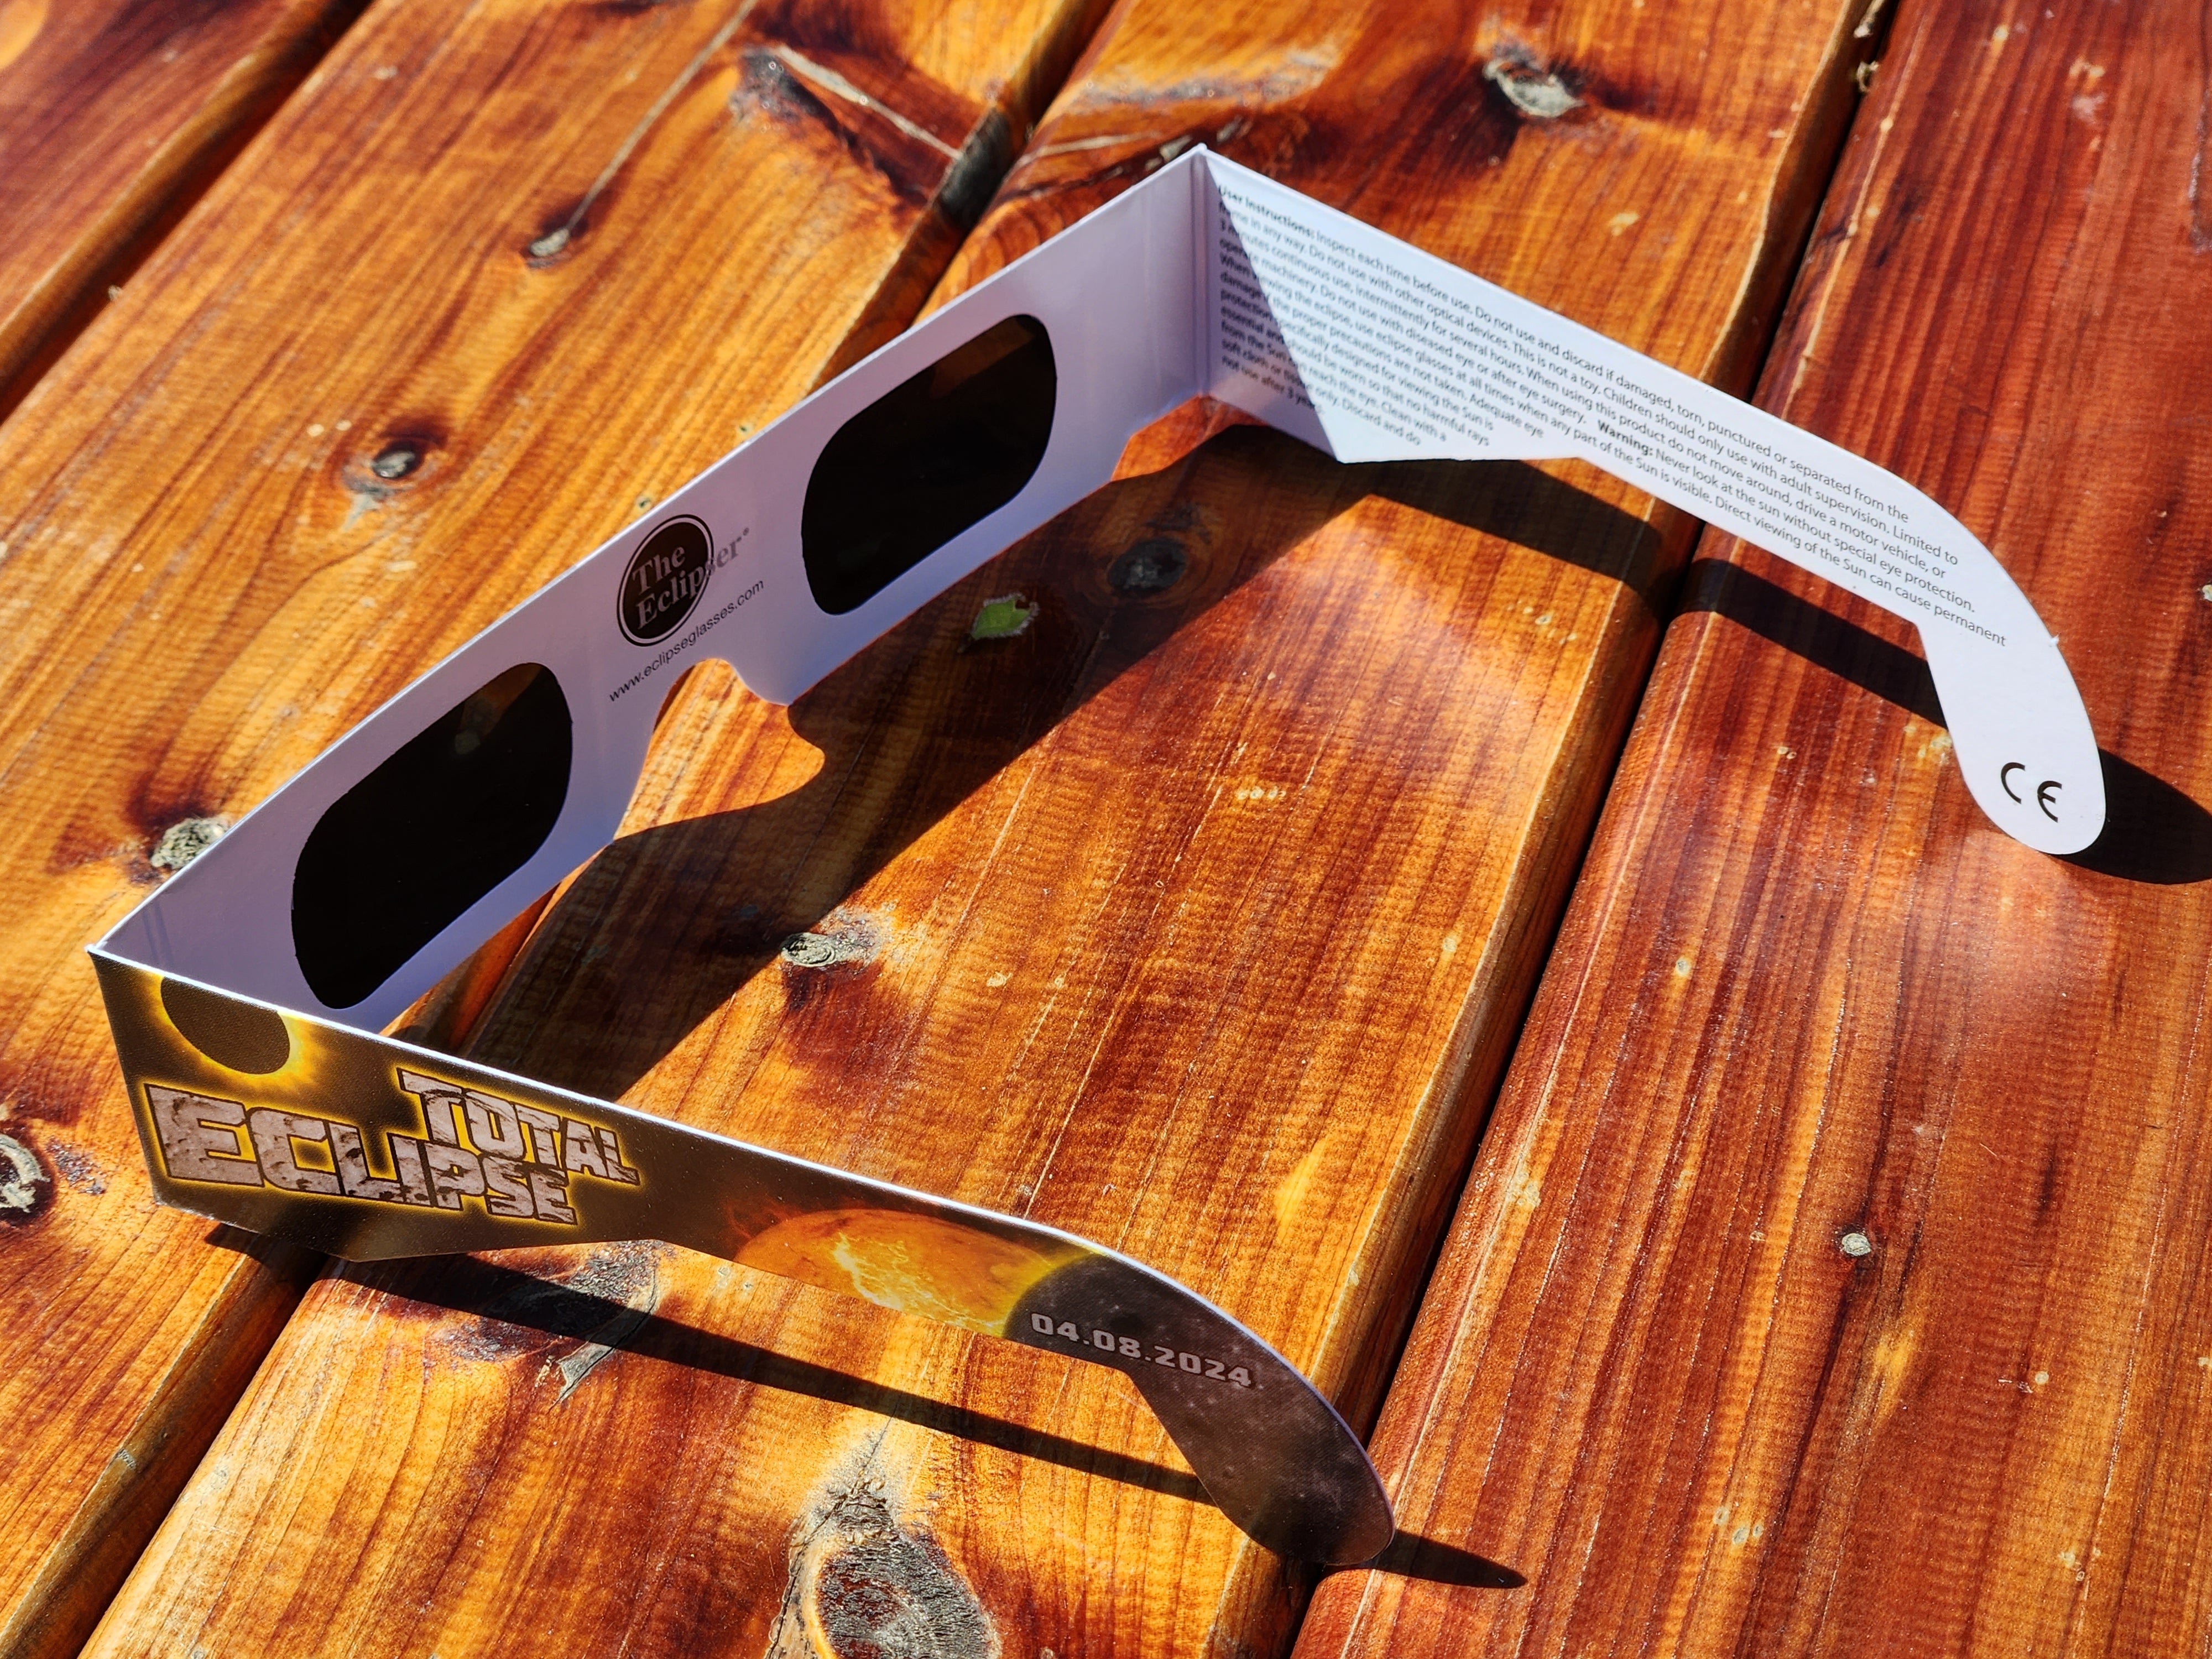 Solar Eclipse Glasses 2 Pack: reg. $19.99 SALE $9.99